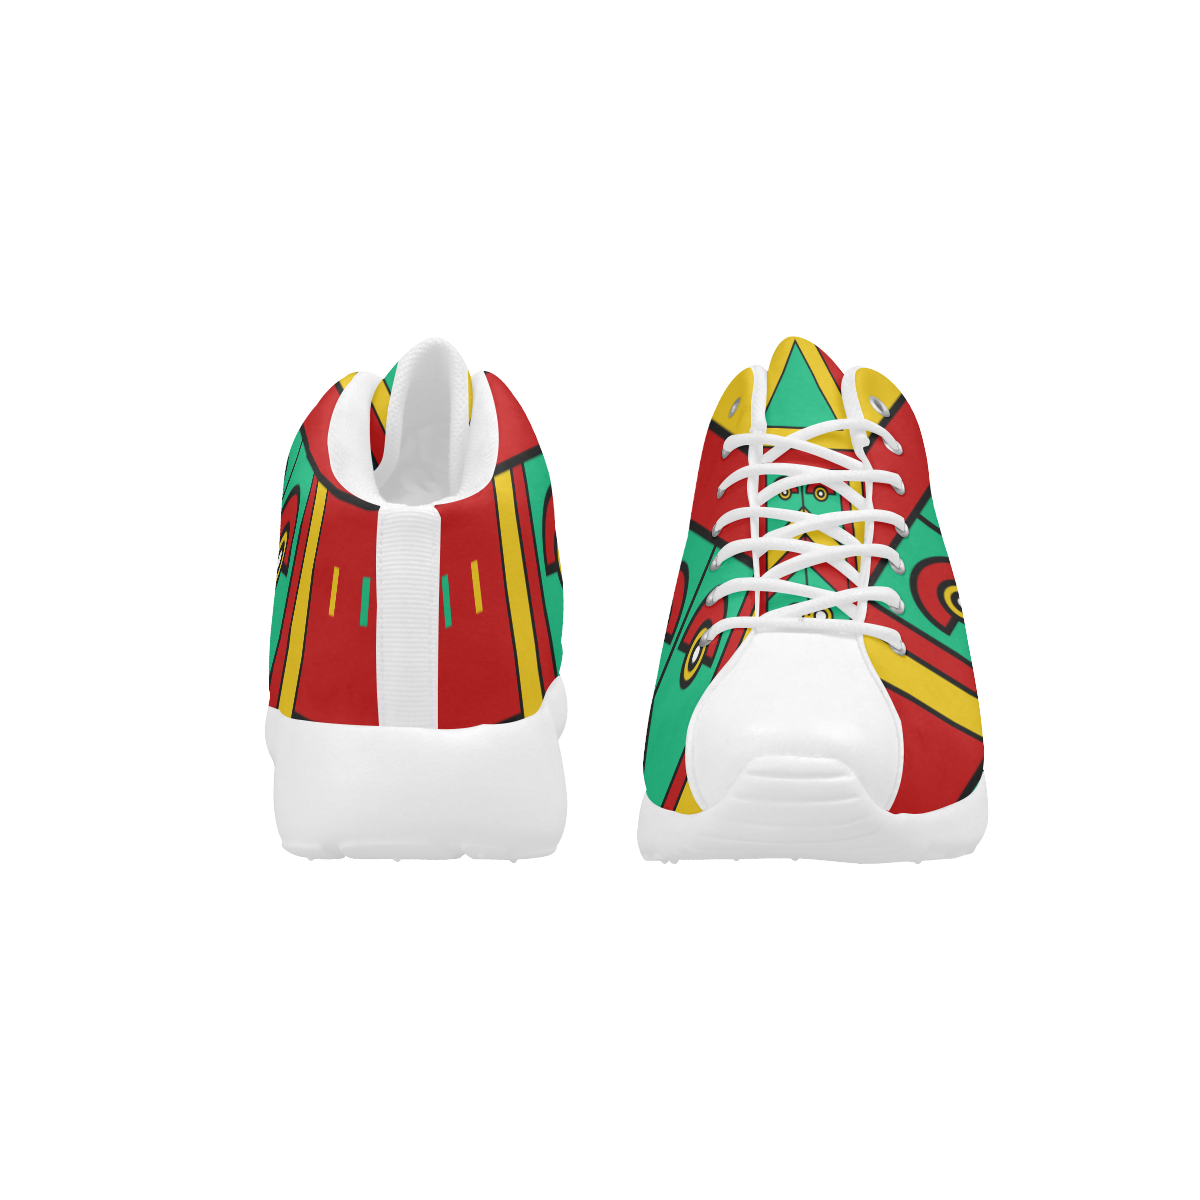 Aztec Spiritual Tribal Women's Basketball Training Shoes (Model 47502)